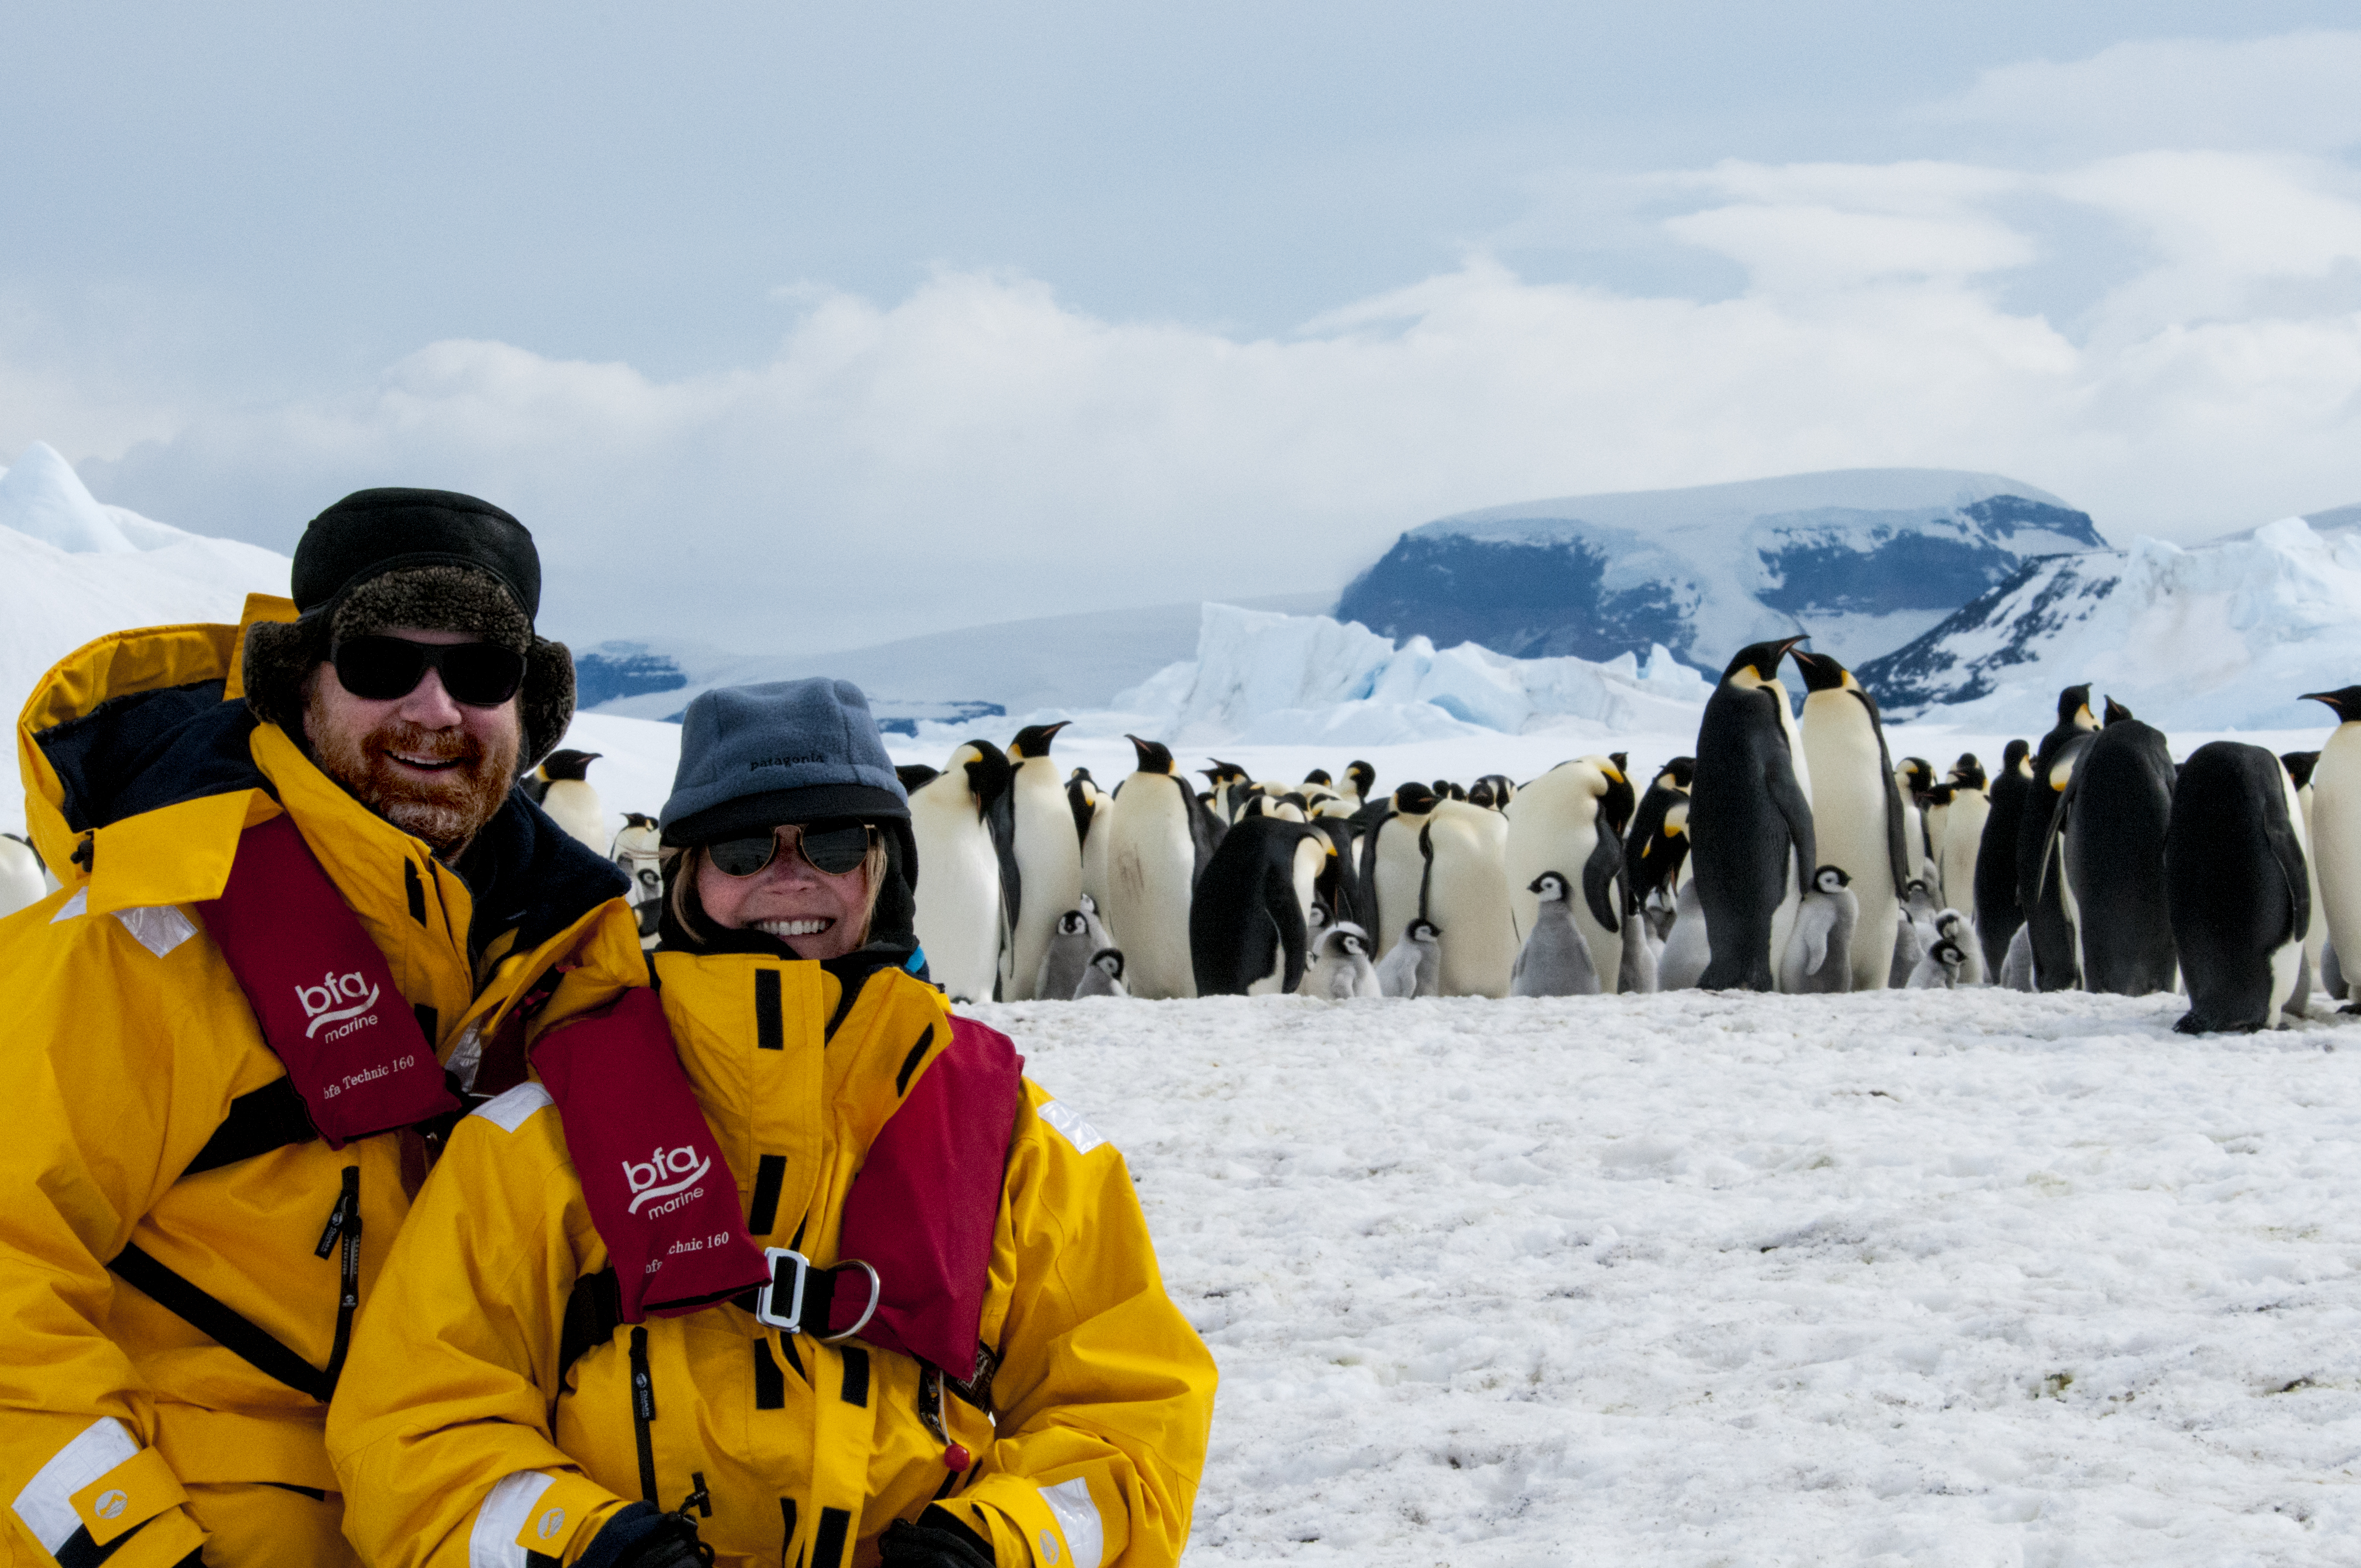 Linda Cornfield SM ’89 and her husband in Antarctica